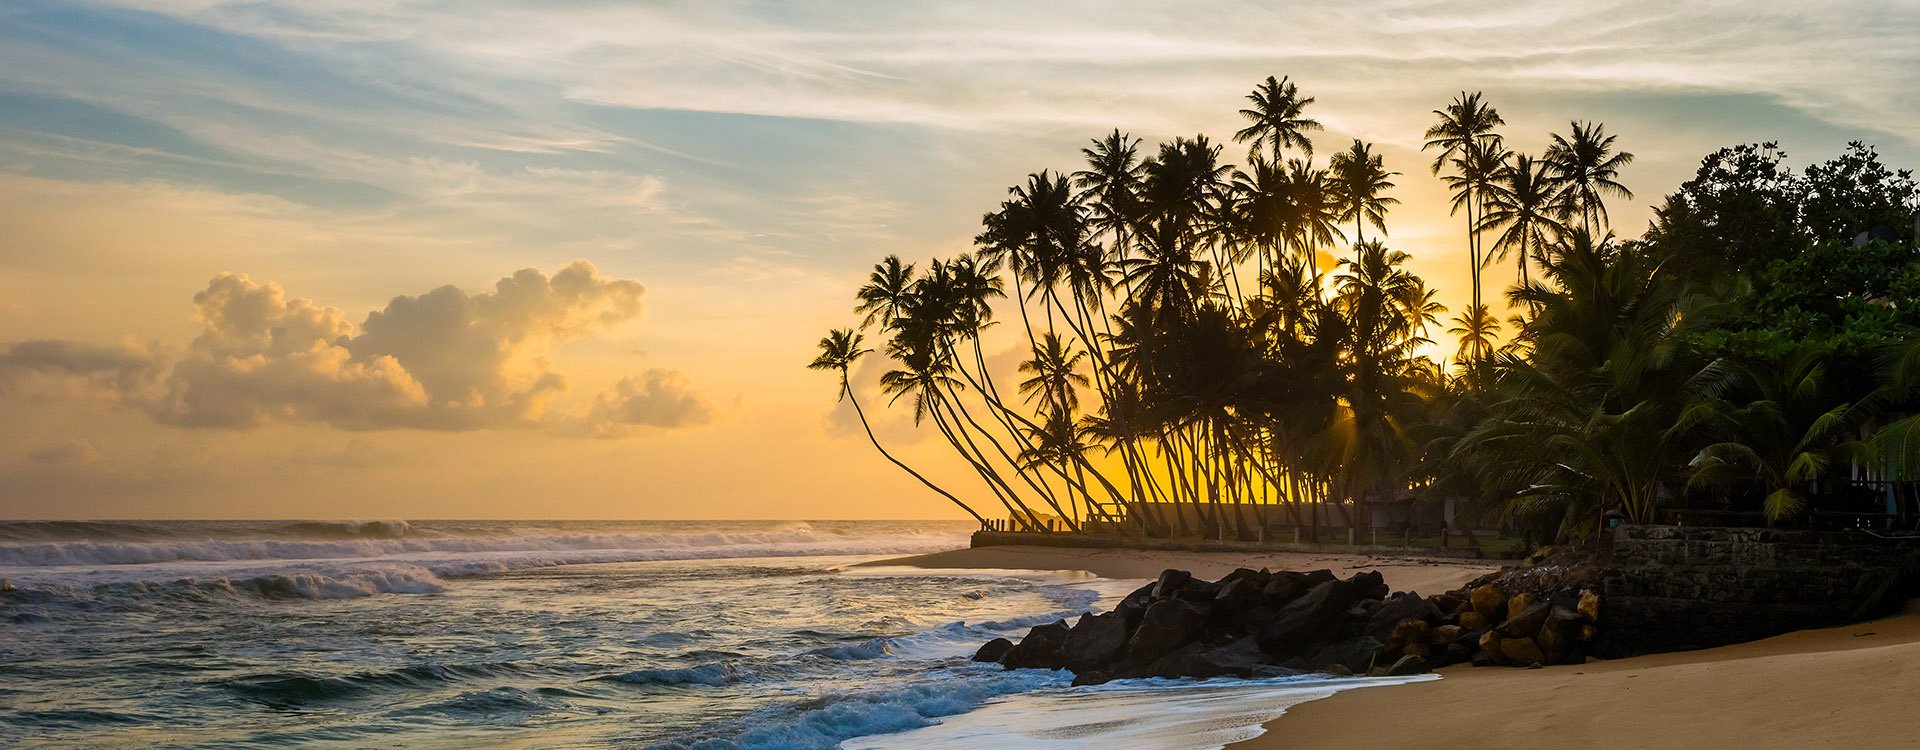 Beautiful tropical sunset with palm trees. Wijaya beach, Sri Lanka.